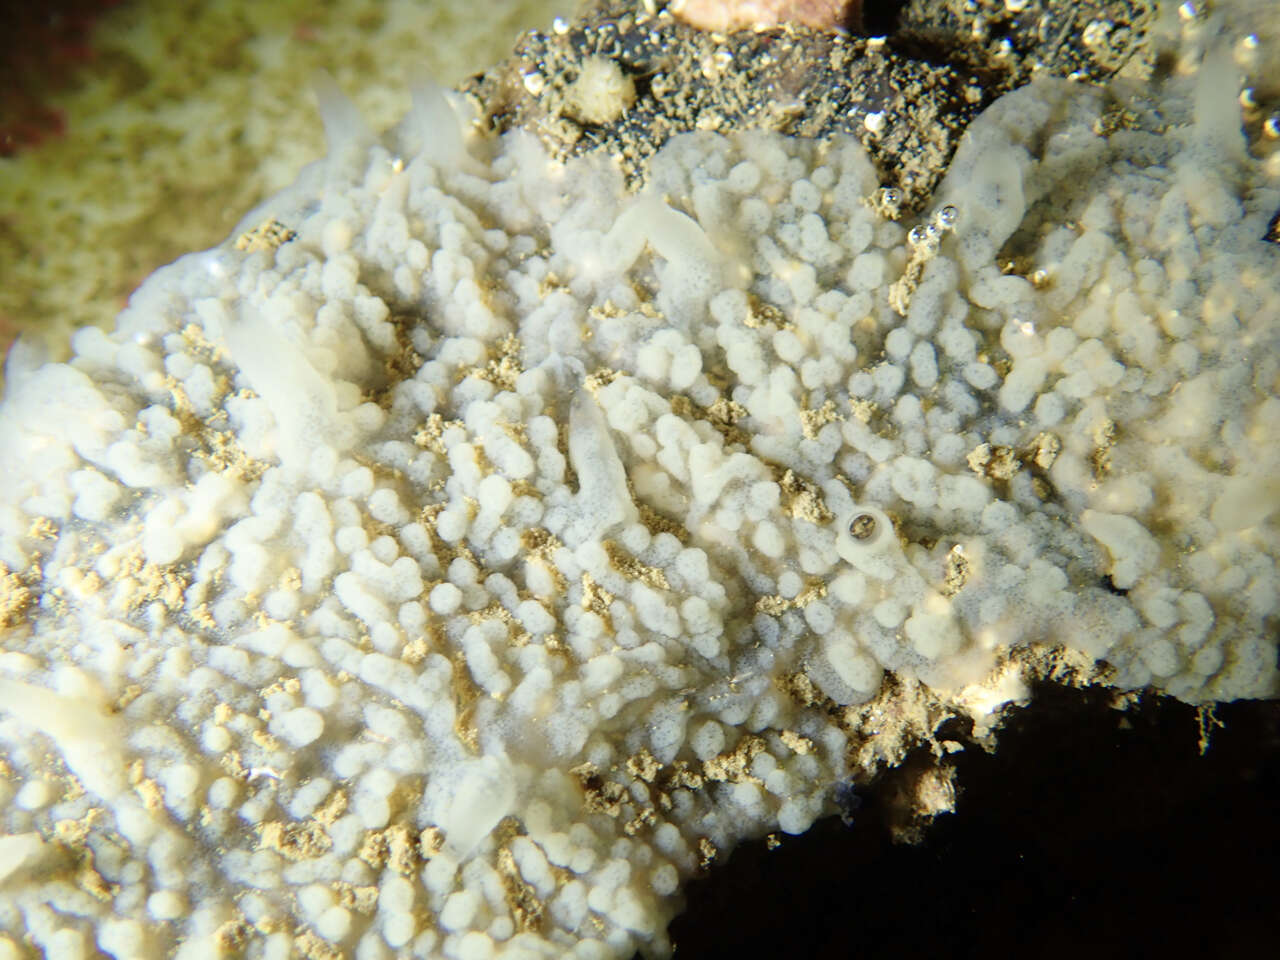 Image of slime membrane sponge